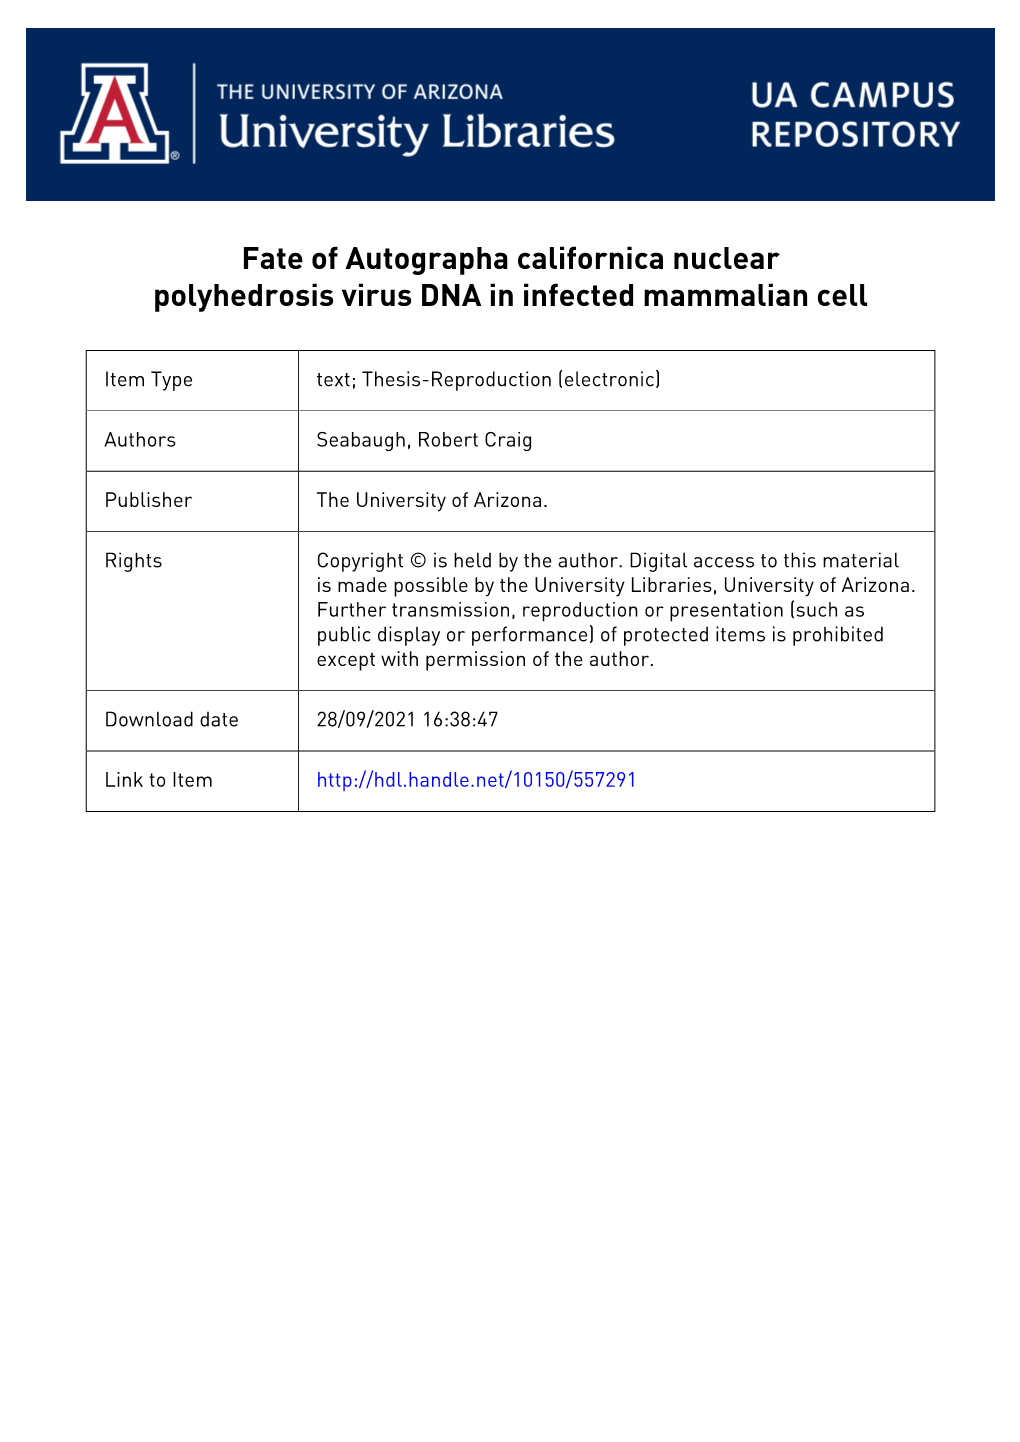 Fate of Autografha Californica Nuclear Polyhedrosis